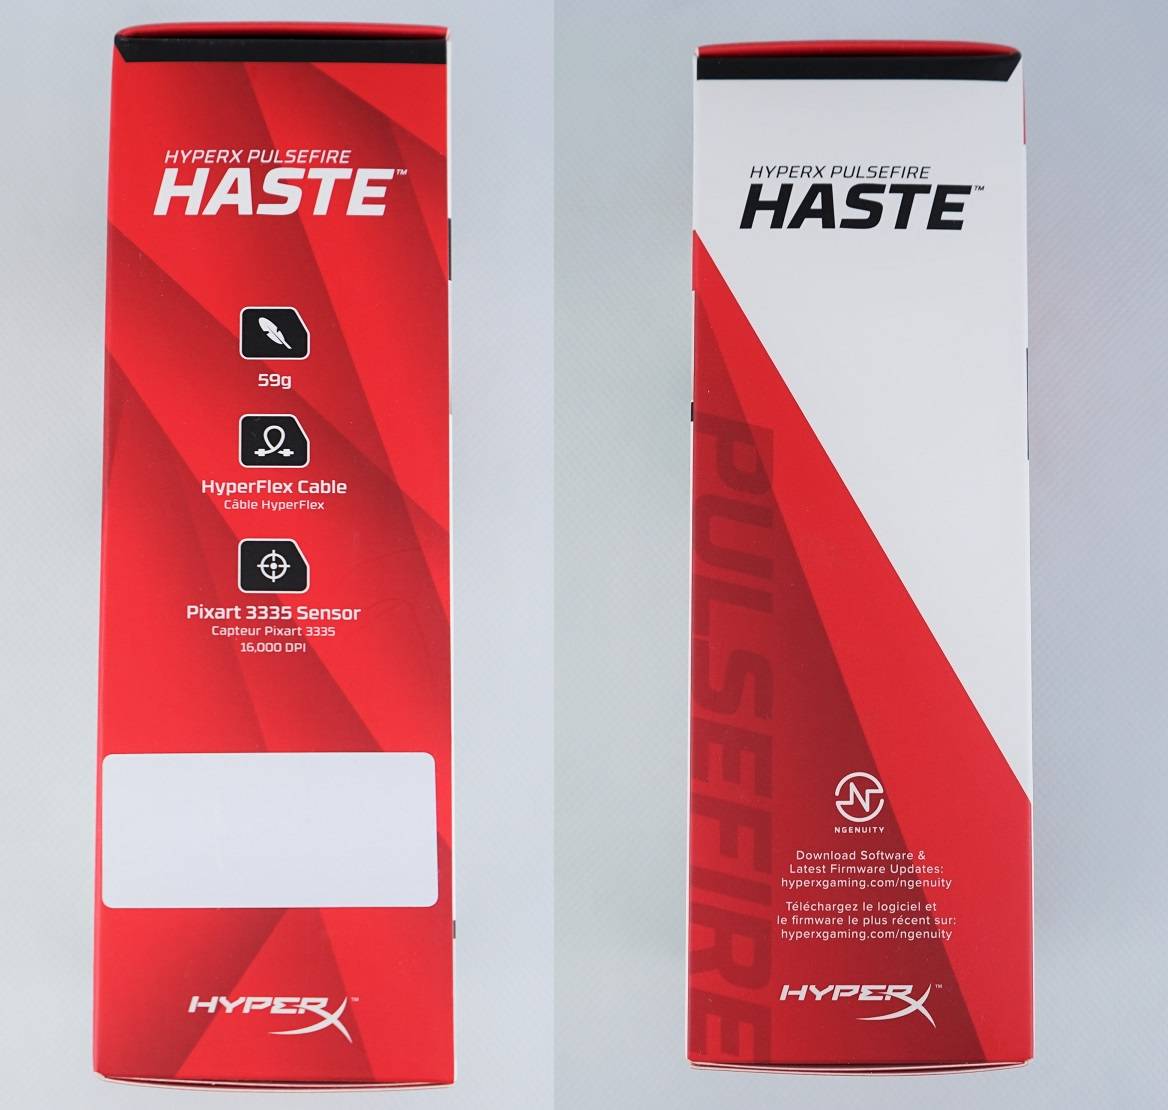 HyperX Pulsefire Haste RGB電競滑鼠